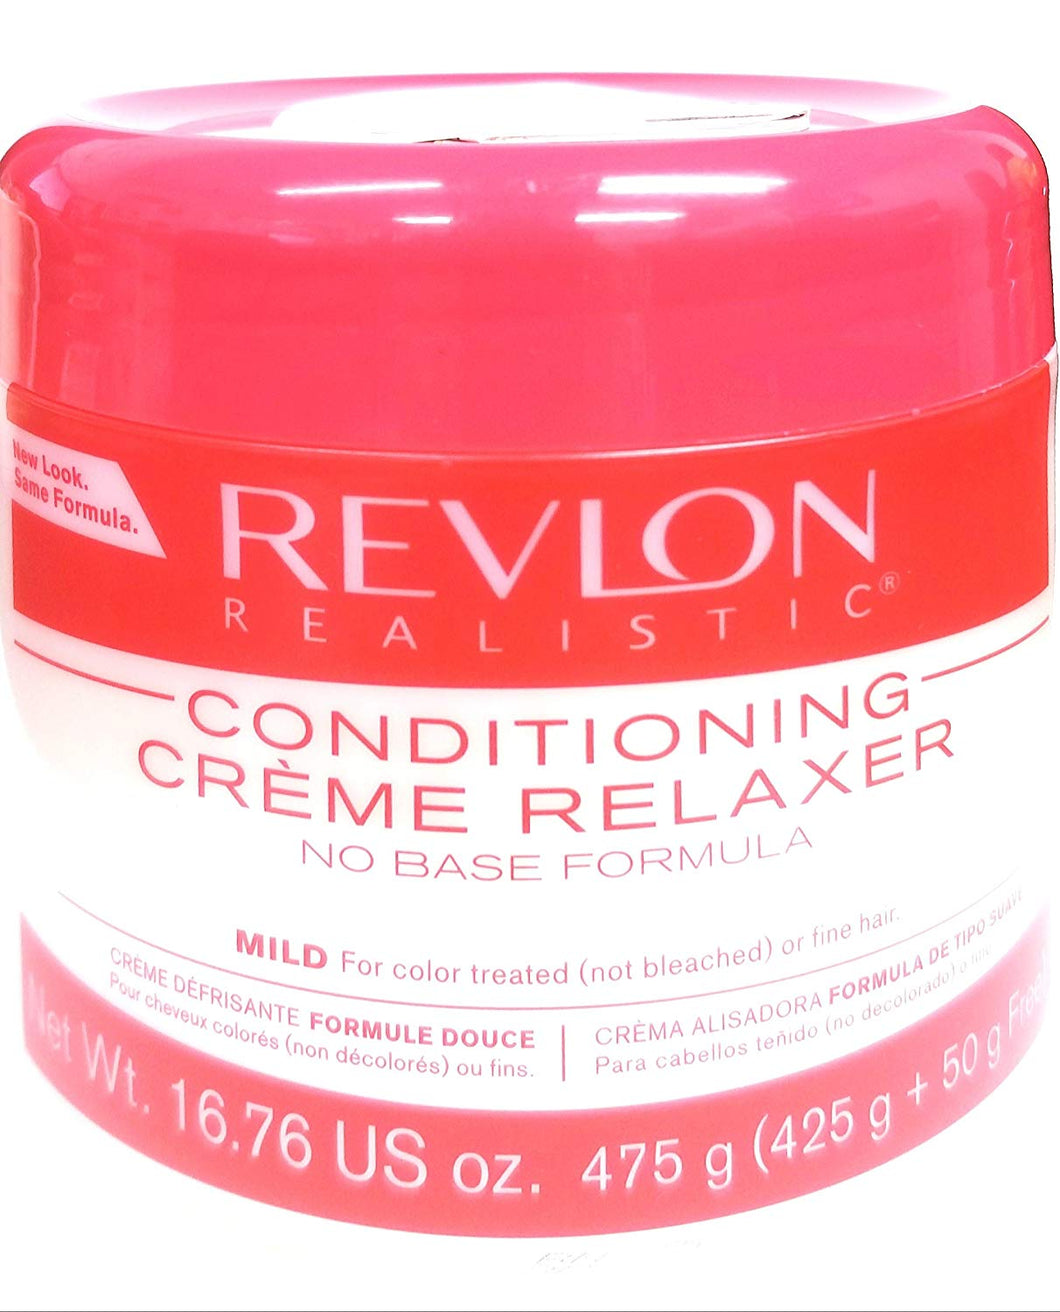 Revlon Conditioning Creme Relaxer 475g